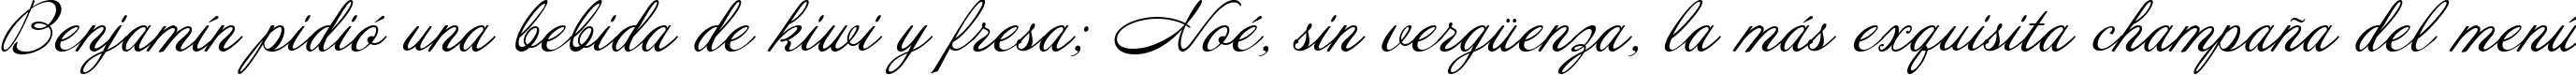 Пример написания шрифтом AnnabelleJF текста на испанском